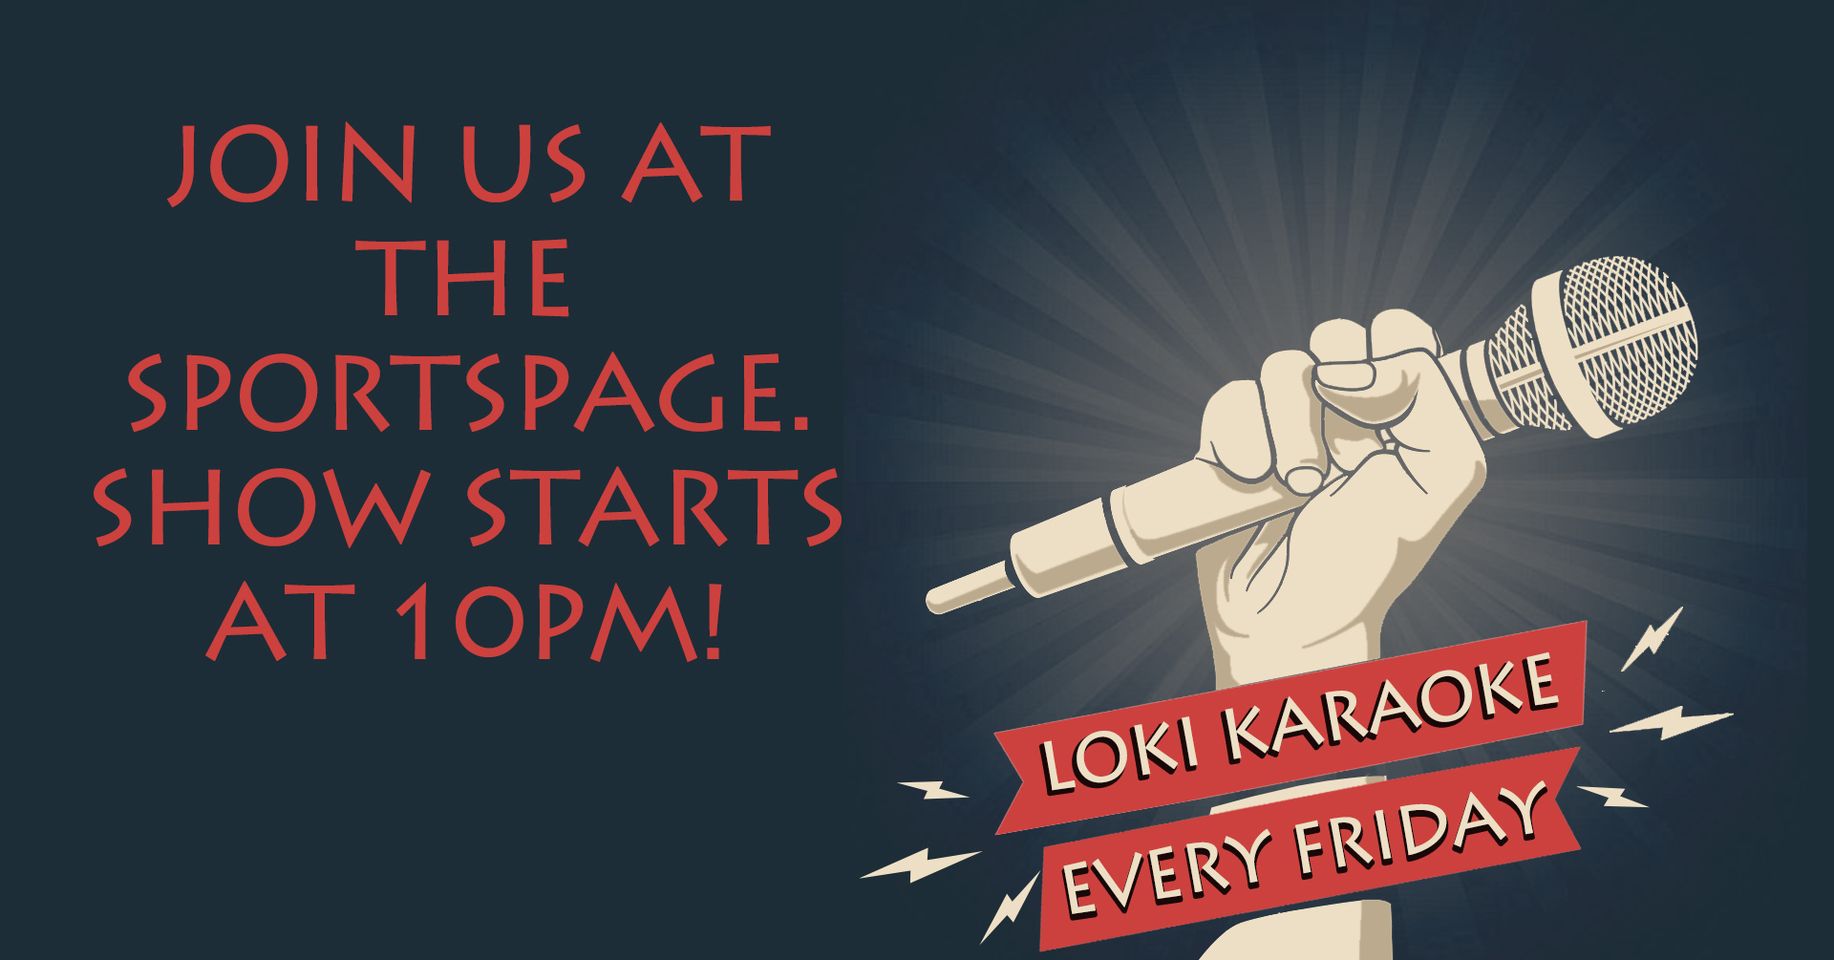 Loki Karaoke every Friday at Sportspage Bowl Grill & Lounge in Polson, Montana